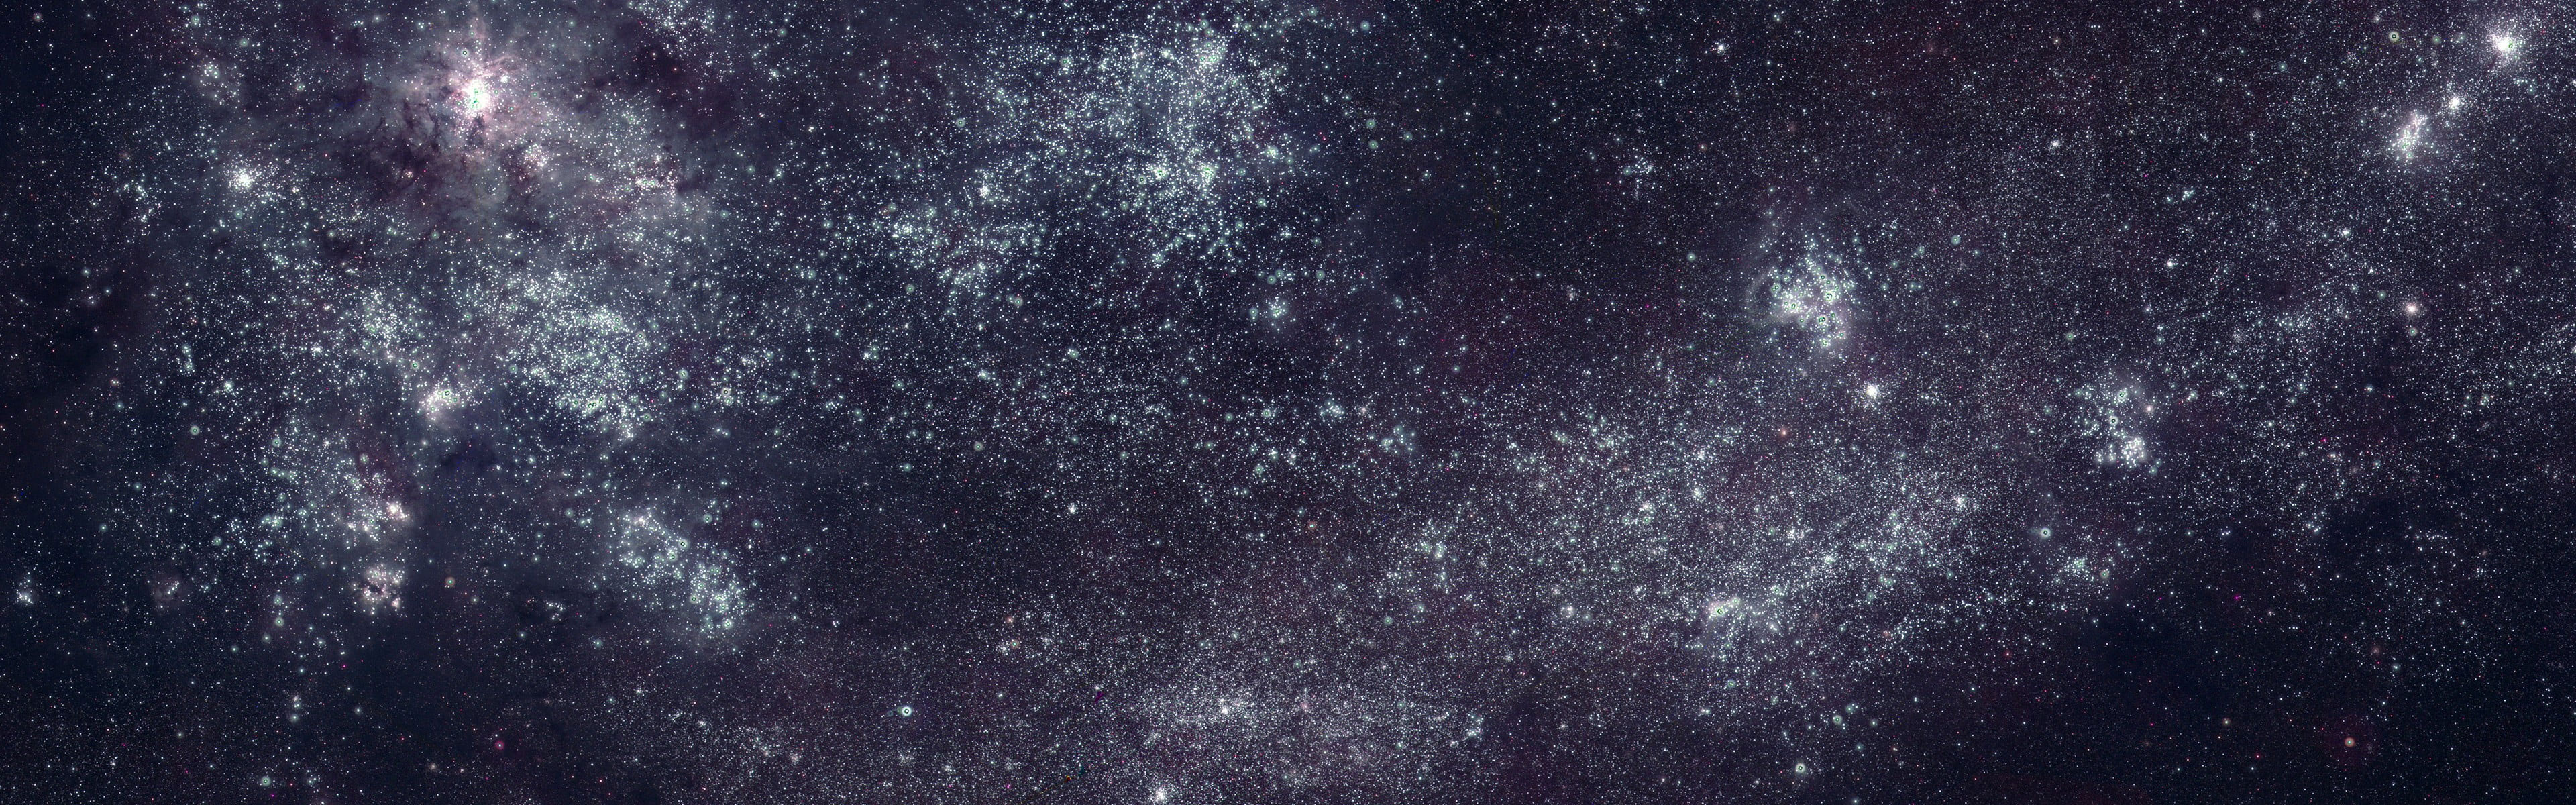 Wallpaper Milky Way Illustration, Large Magellanic Cloud, Large Magellanic Cloud, Space